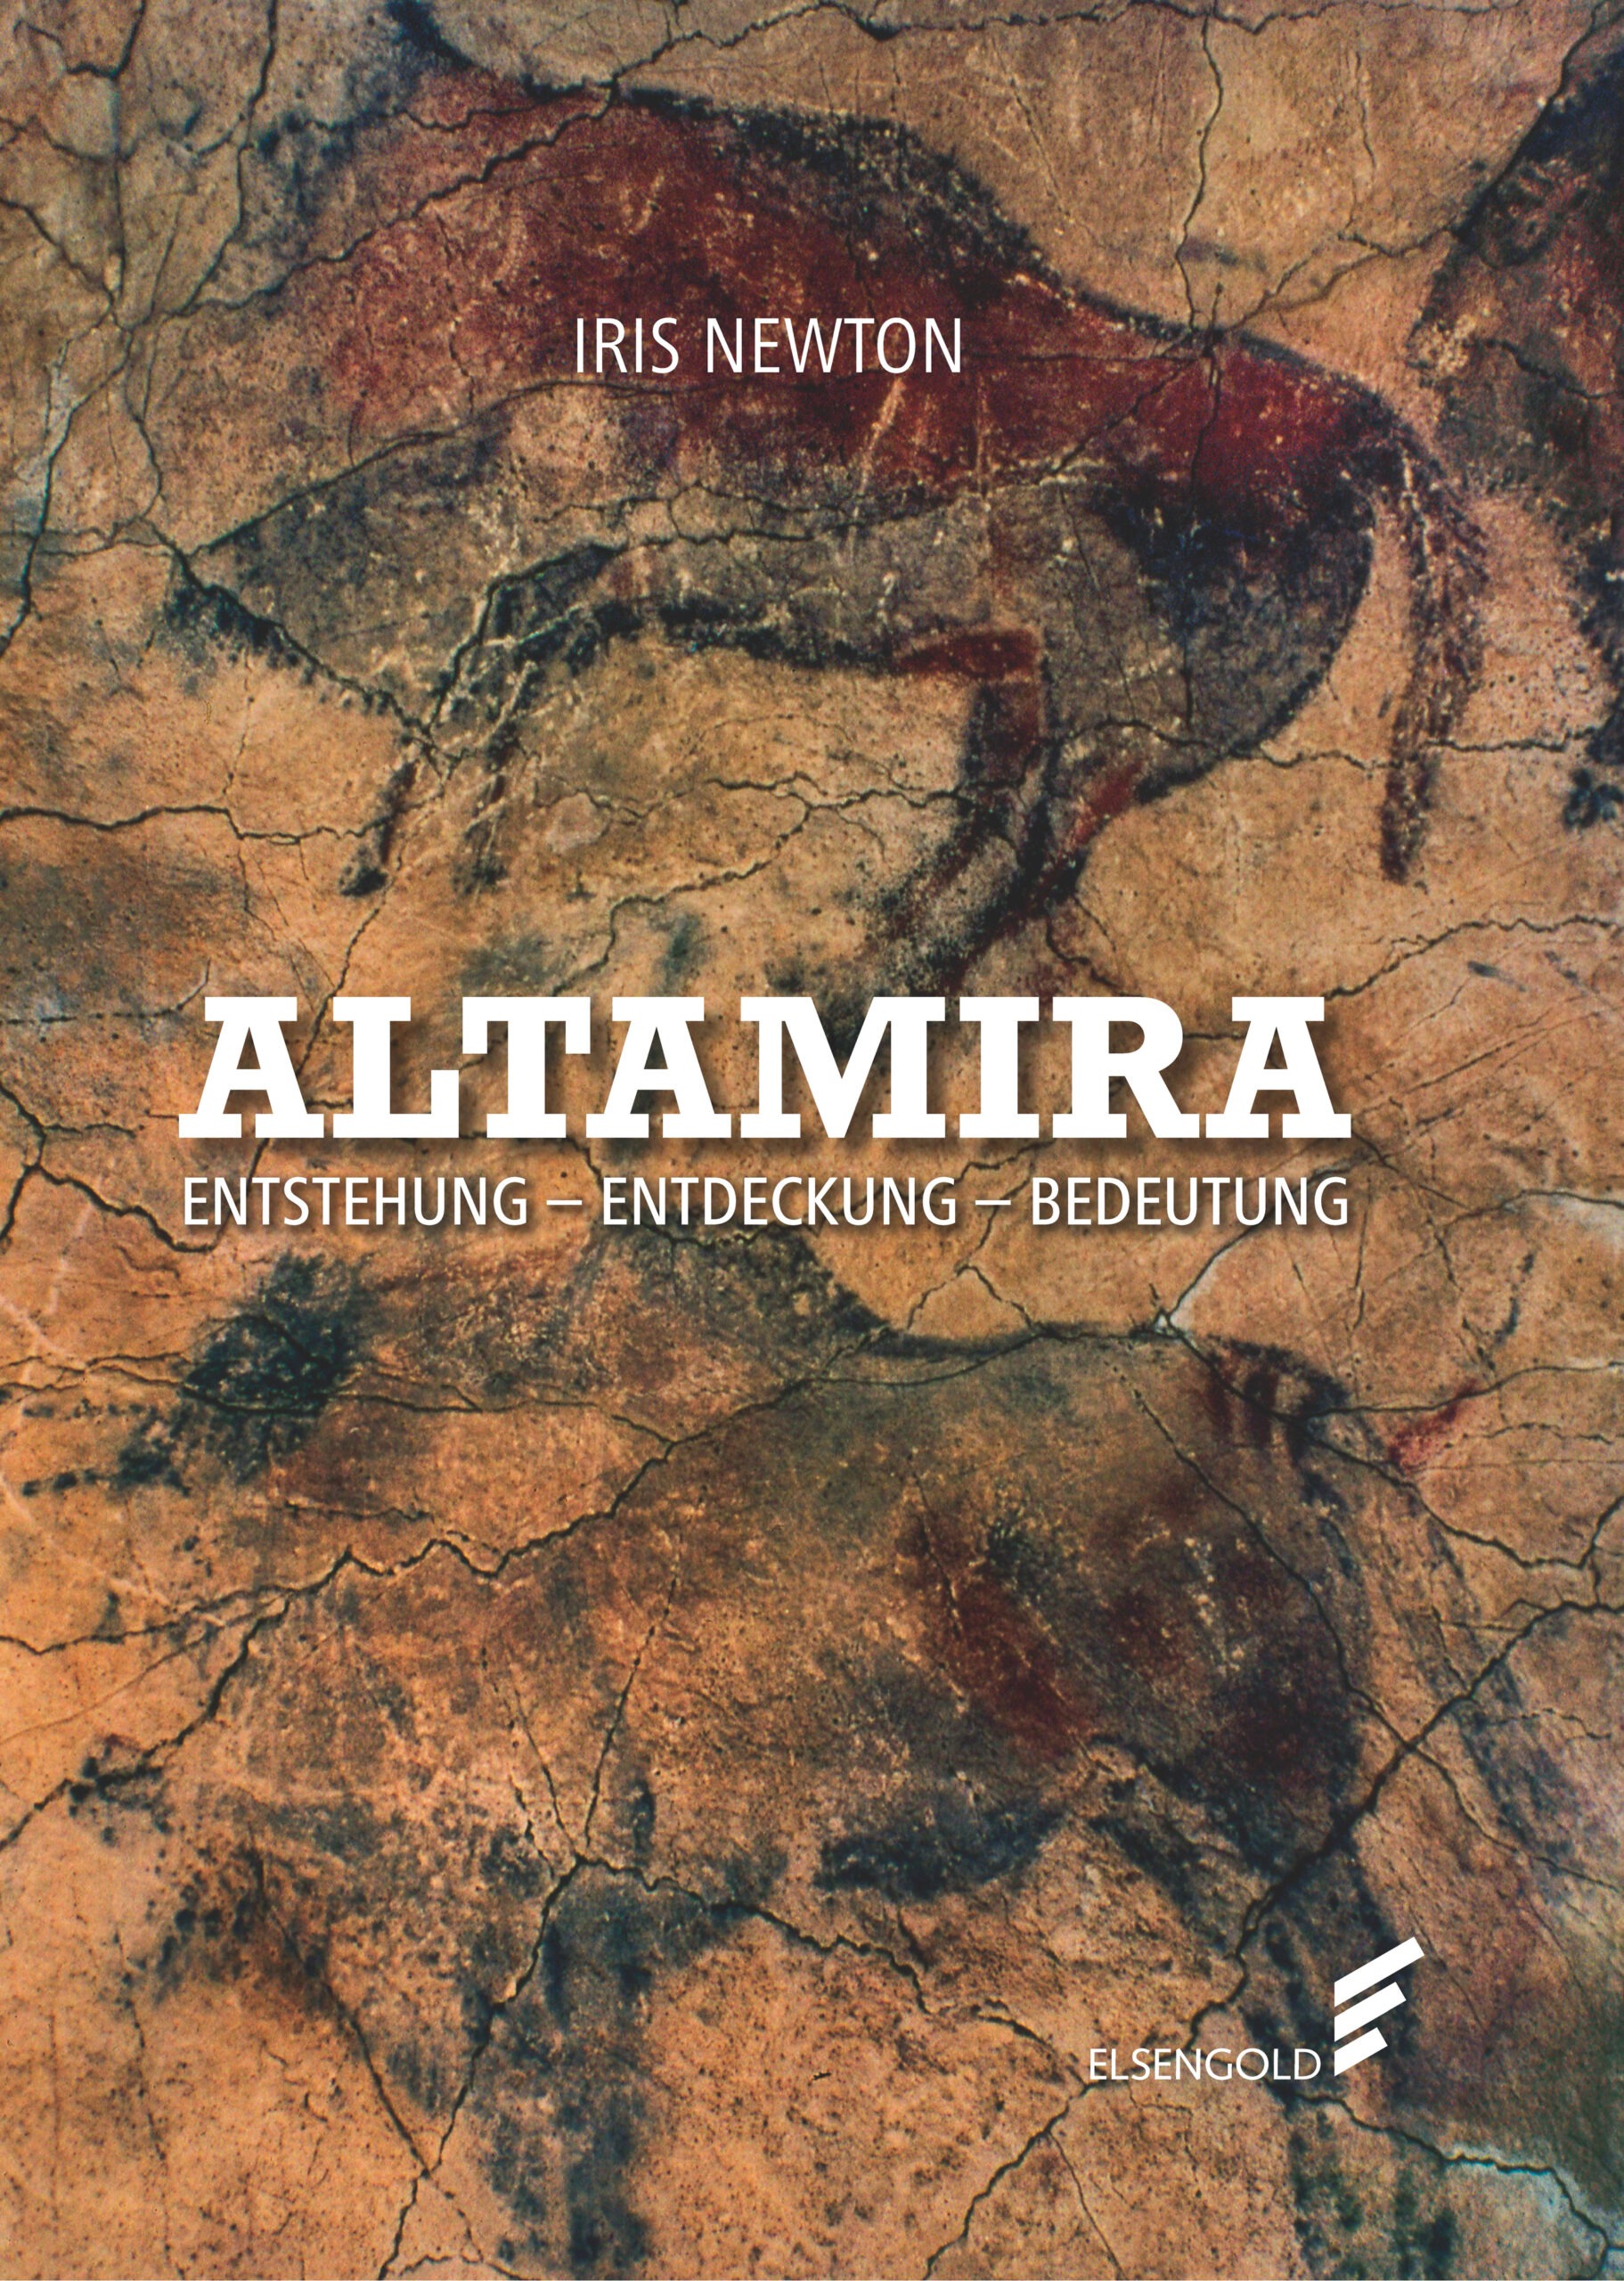 Altamira Höhlenmalerei Buch Cover 300